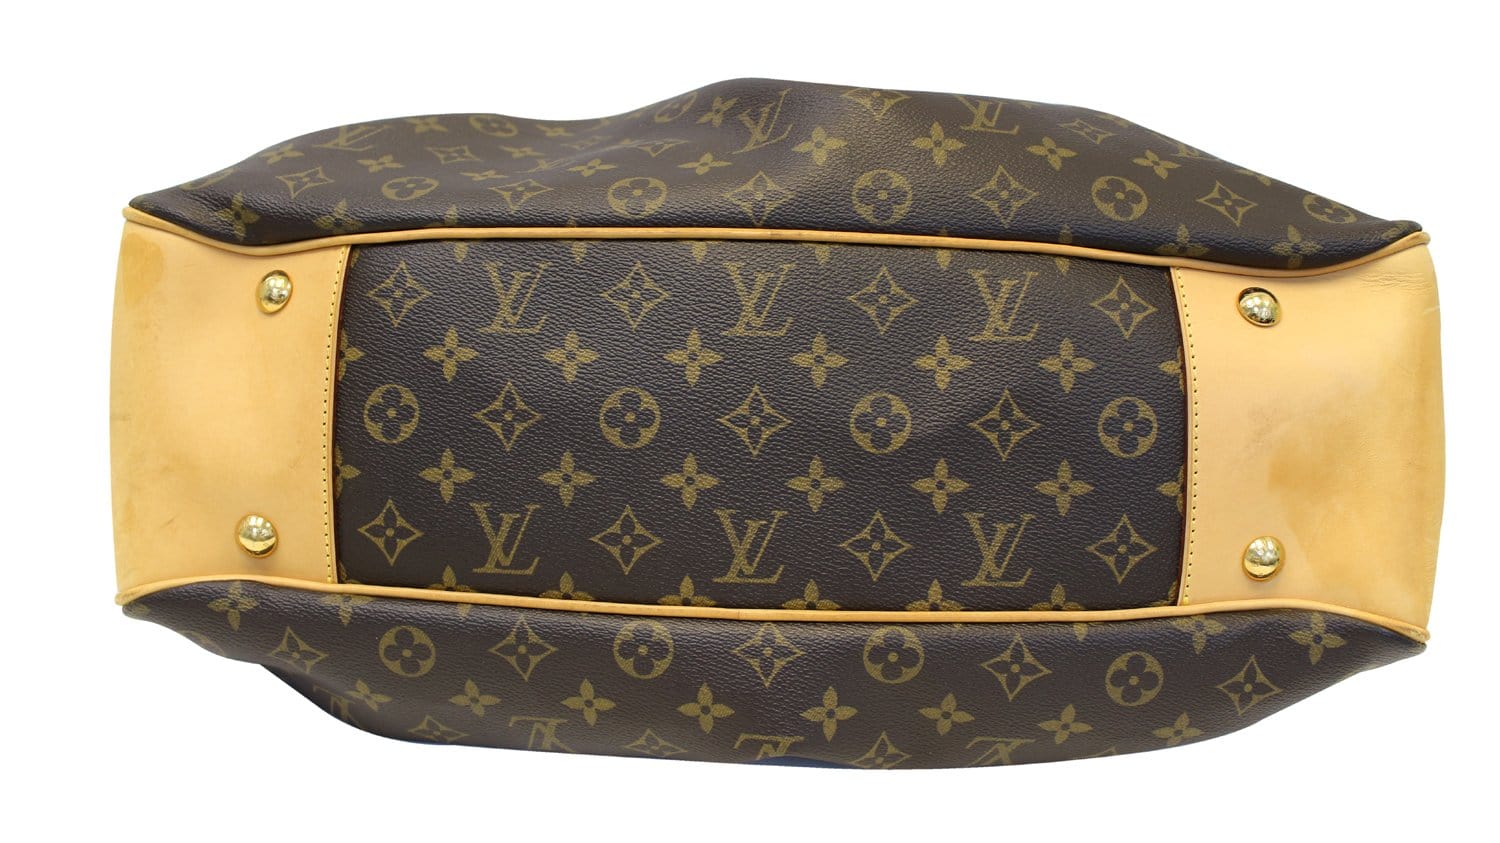 Louis Vuitton Handbag Boetie Gm Monogram Canvas Shoulder Bag Added